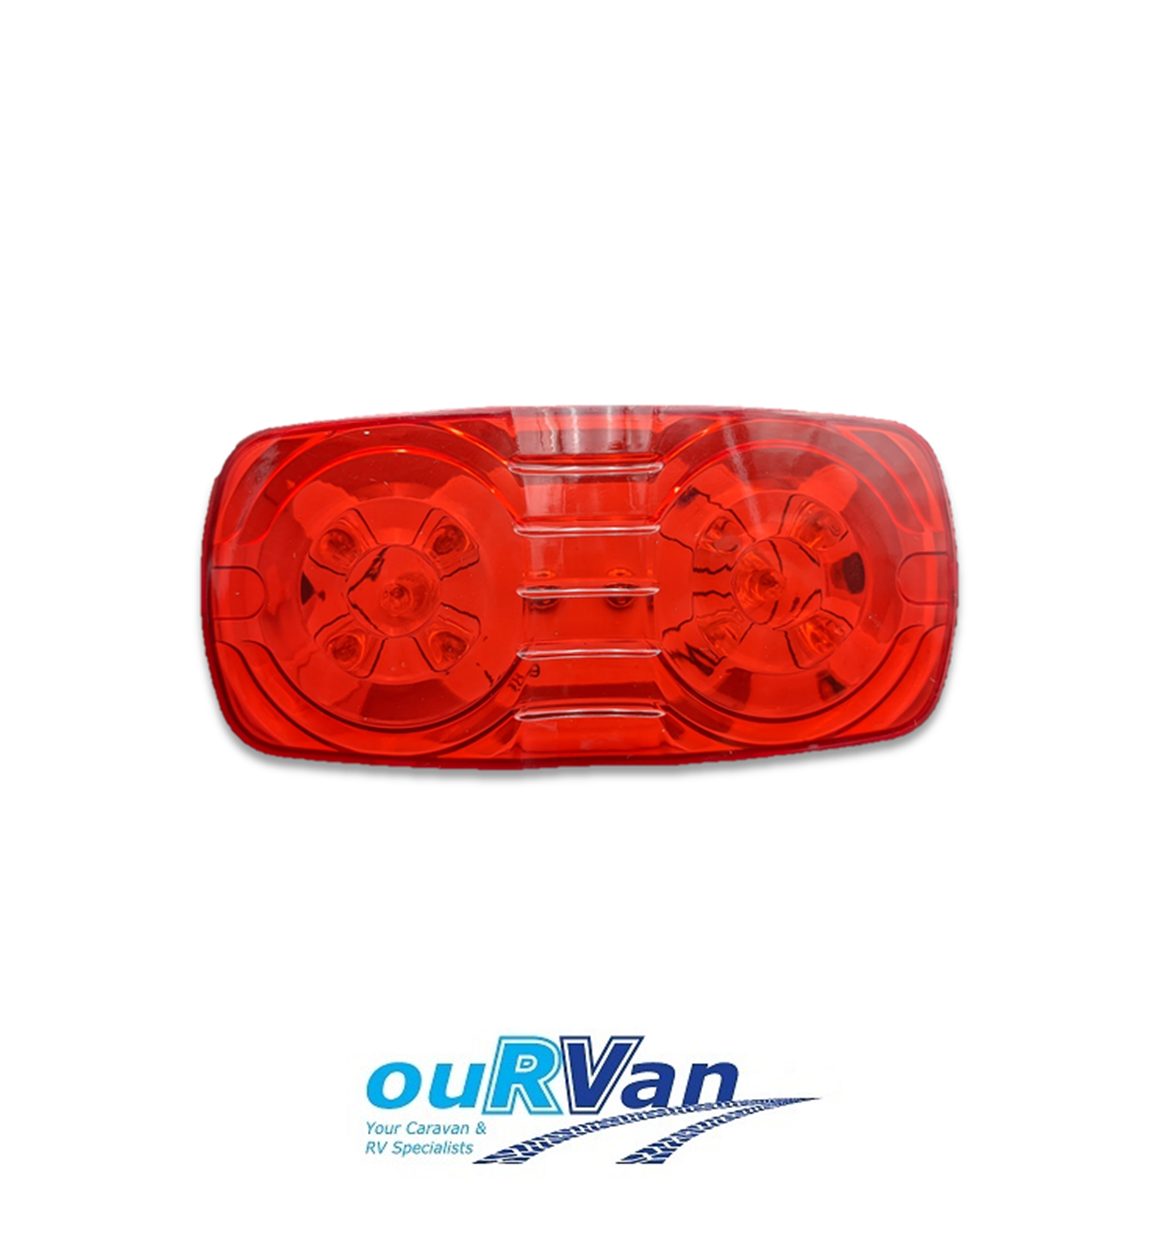 NEW LED 86330 Replacement Rear End Outline Lamp Light Caravan Camper RV00036